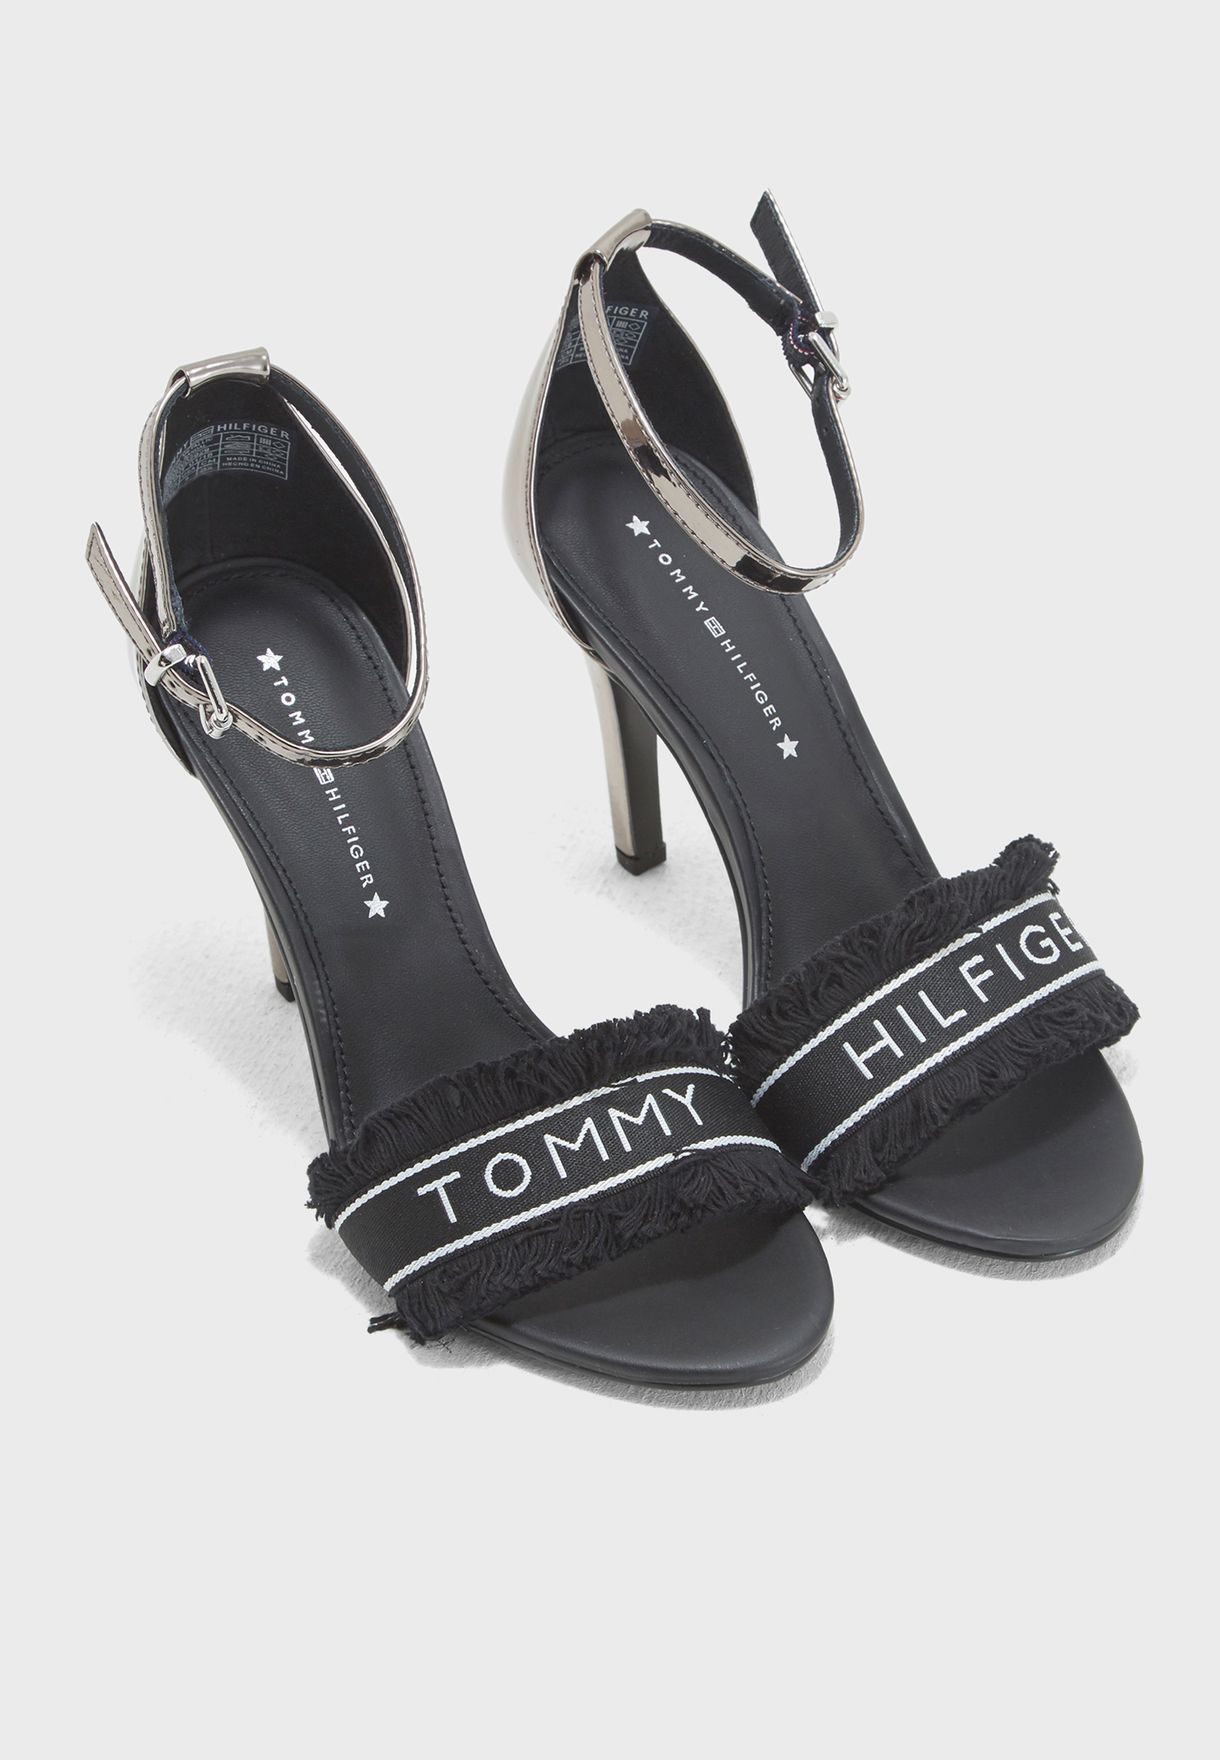 fioni women's shoes